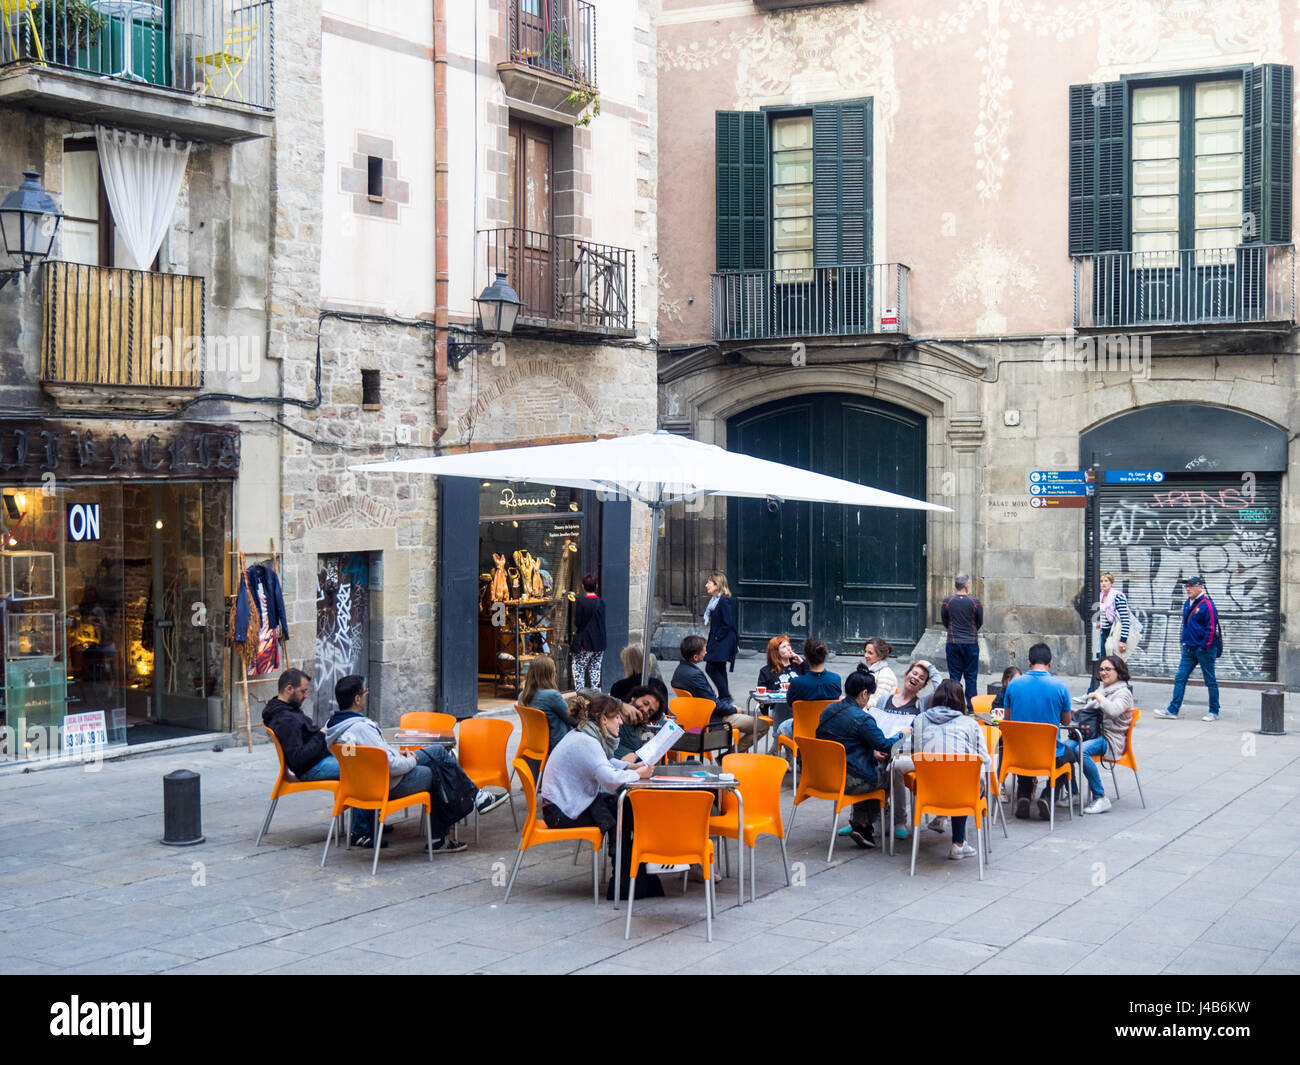 Al fresco dining in Placa Sant Just, Barcelona, Spain. Stock Photo